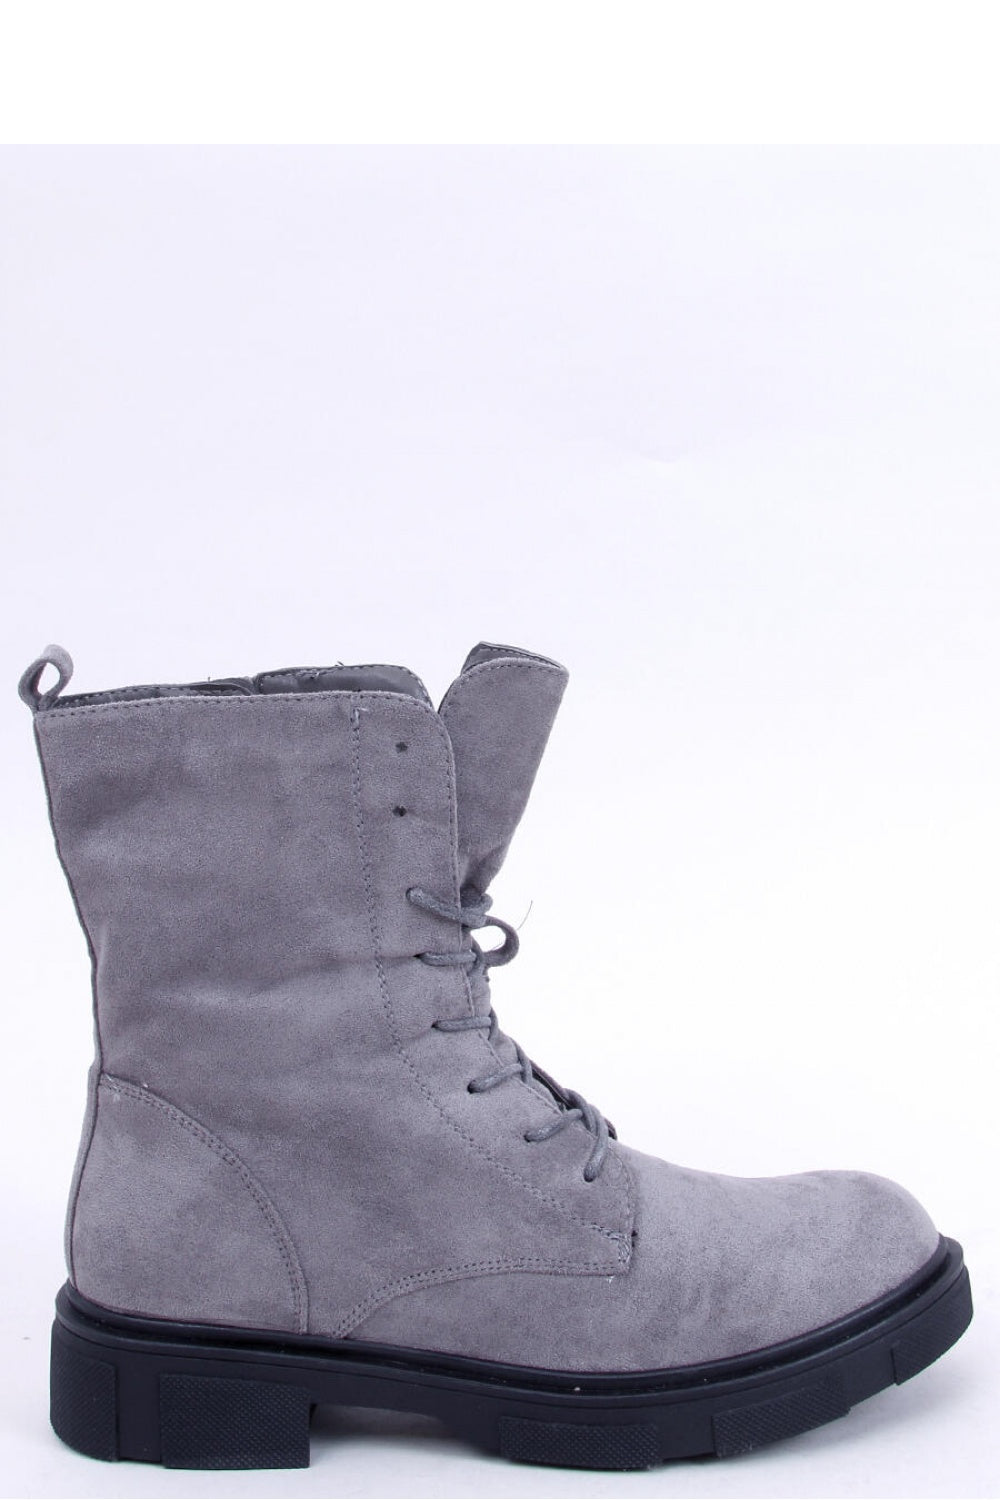 Boots model 172857 Inello Posh Styles Apparel